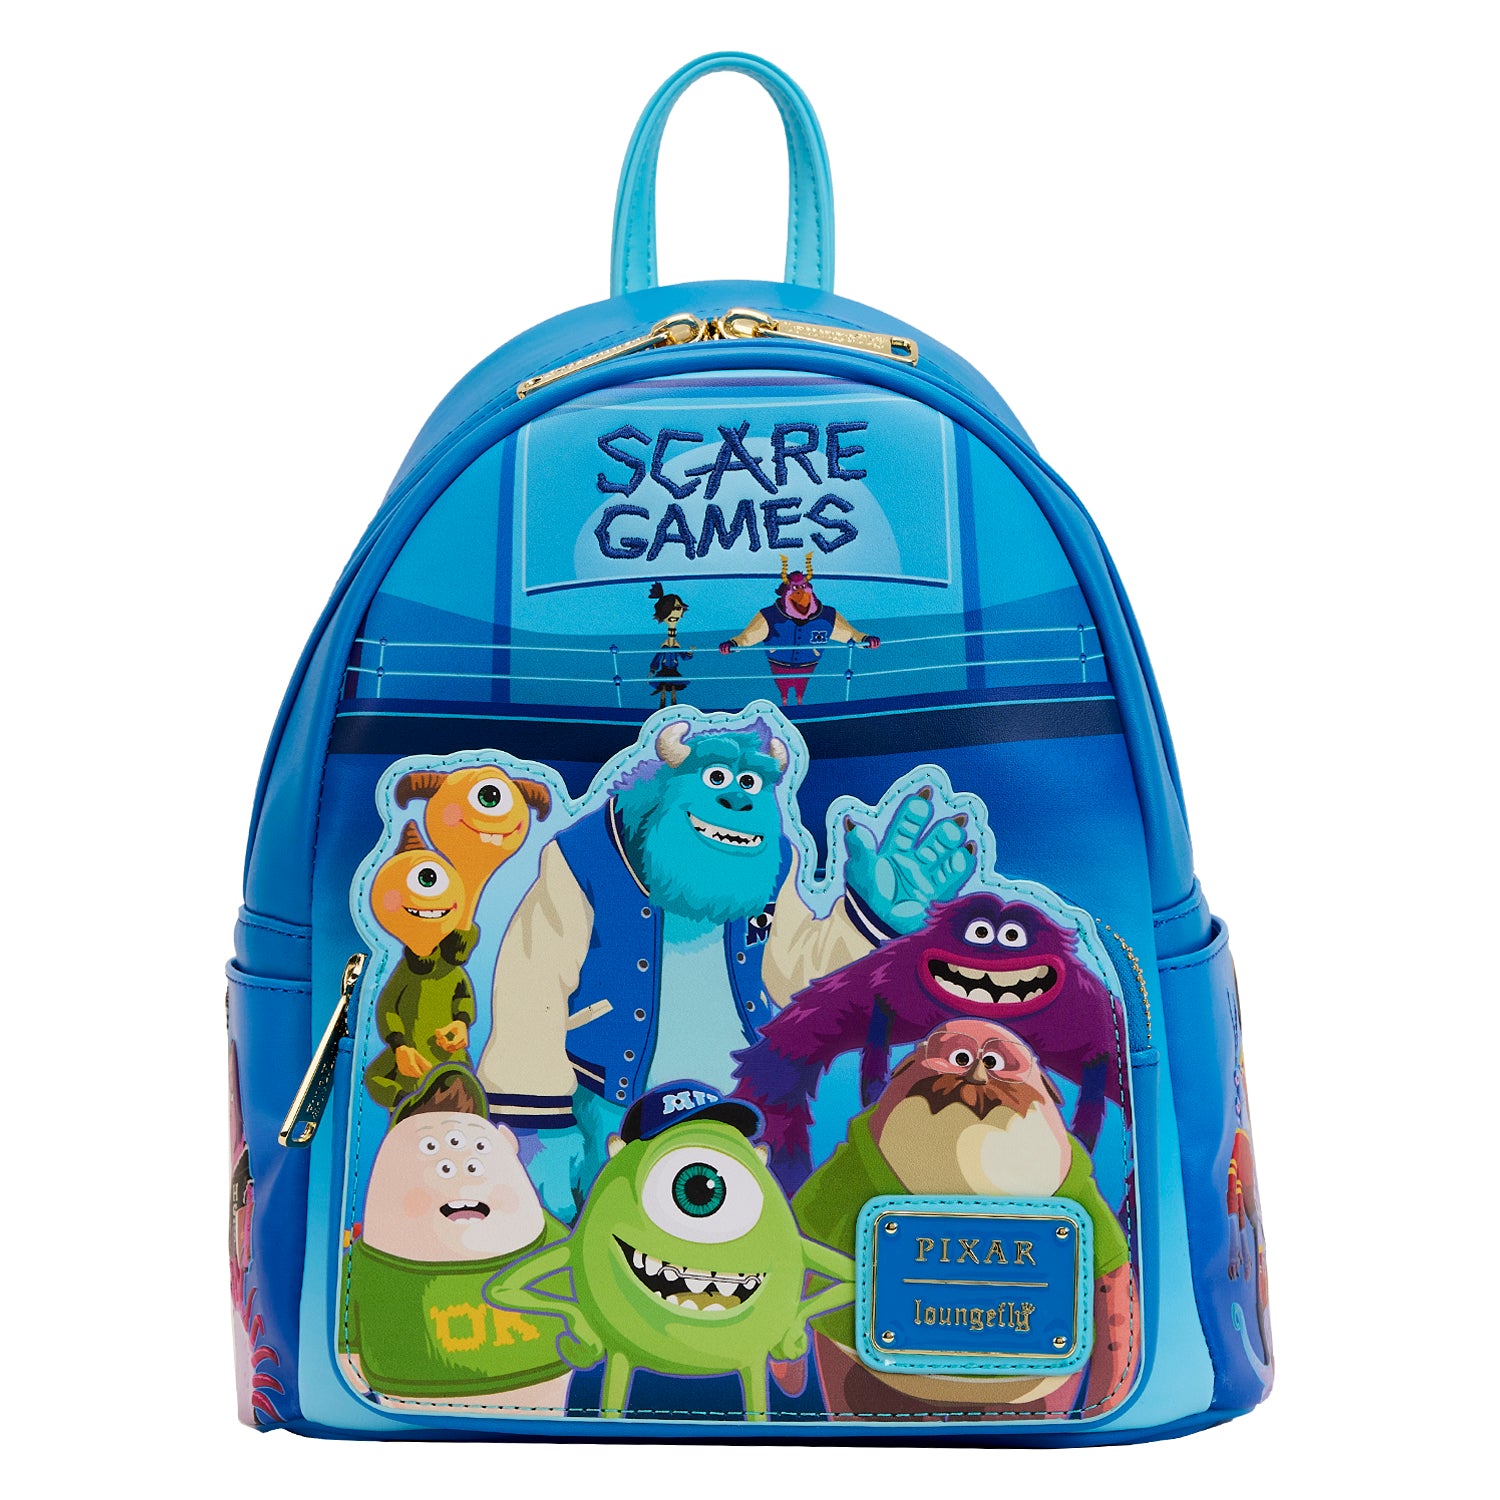 Pixar | Monsters University Scare Games Mini Backpack